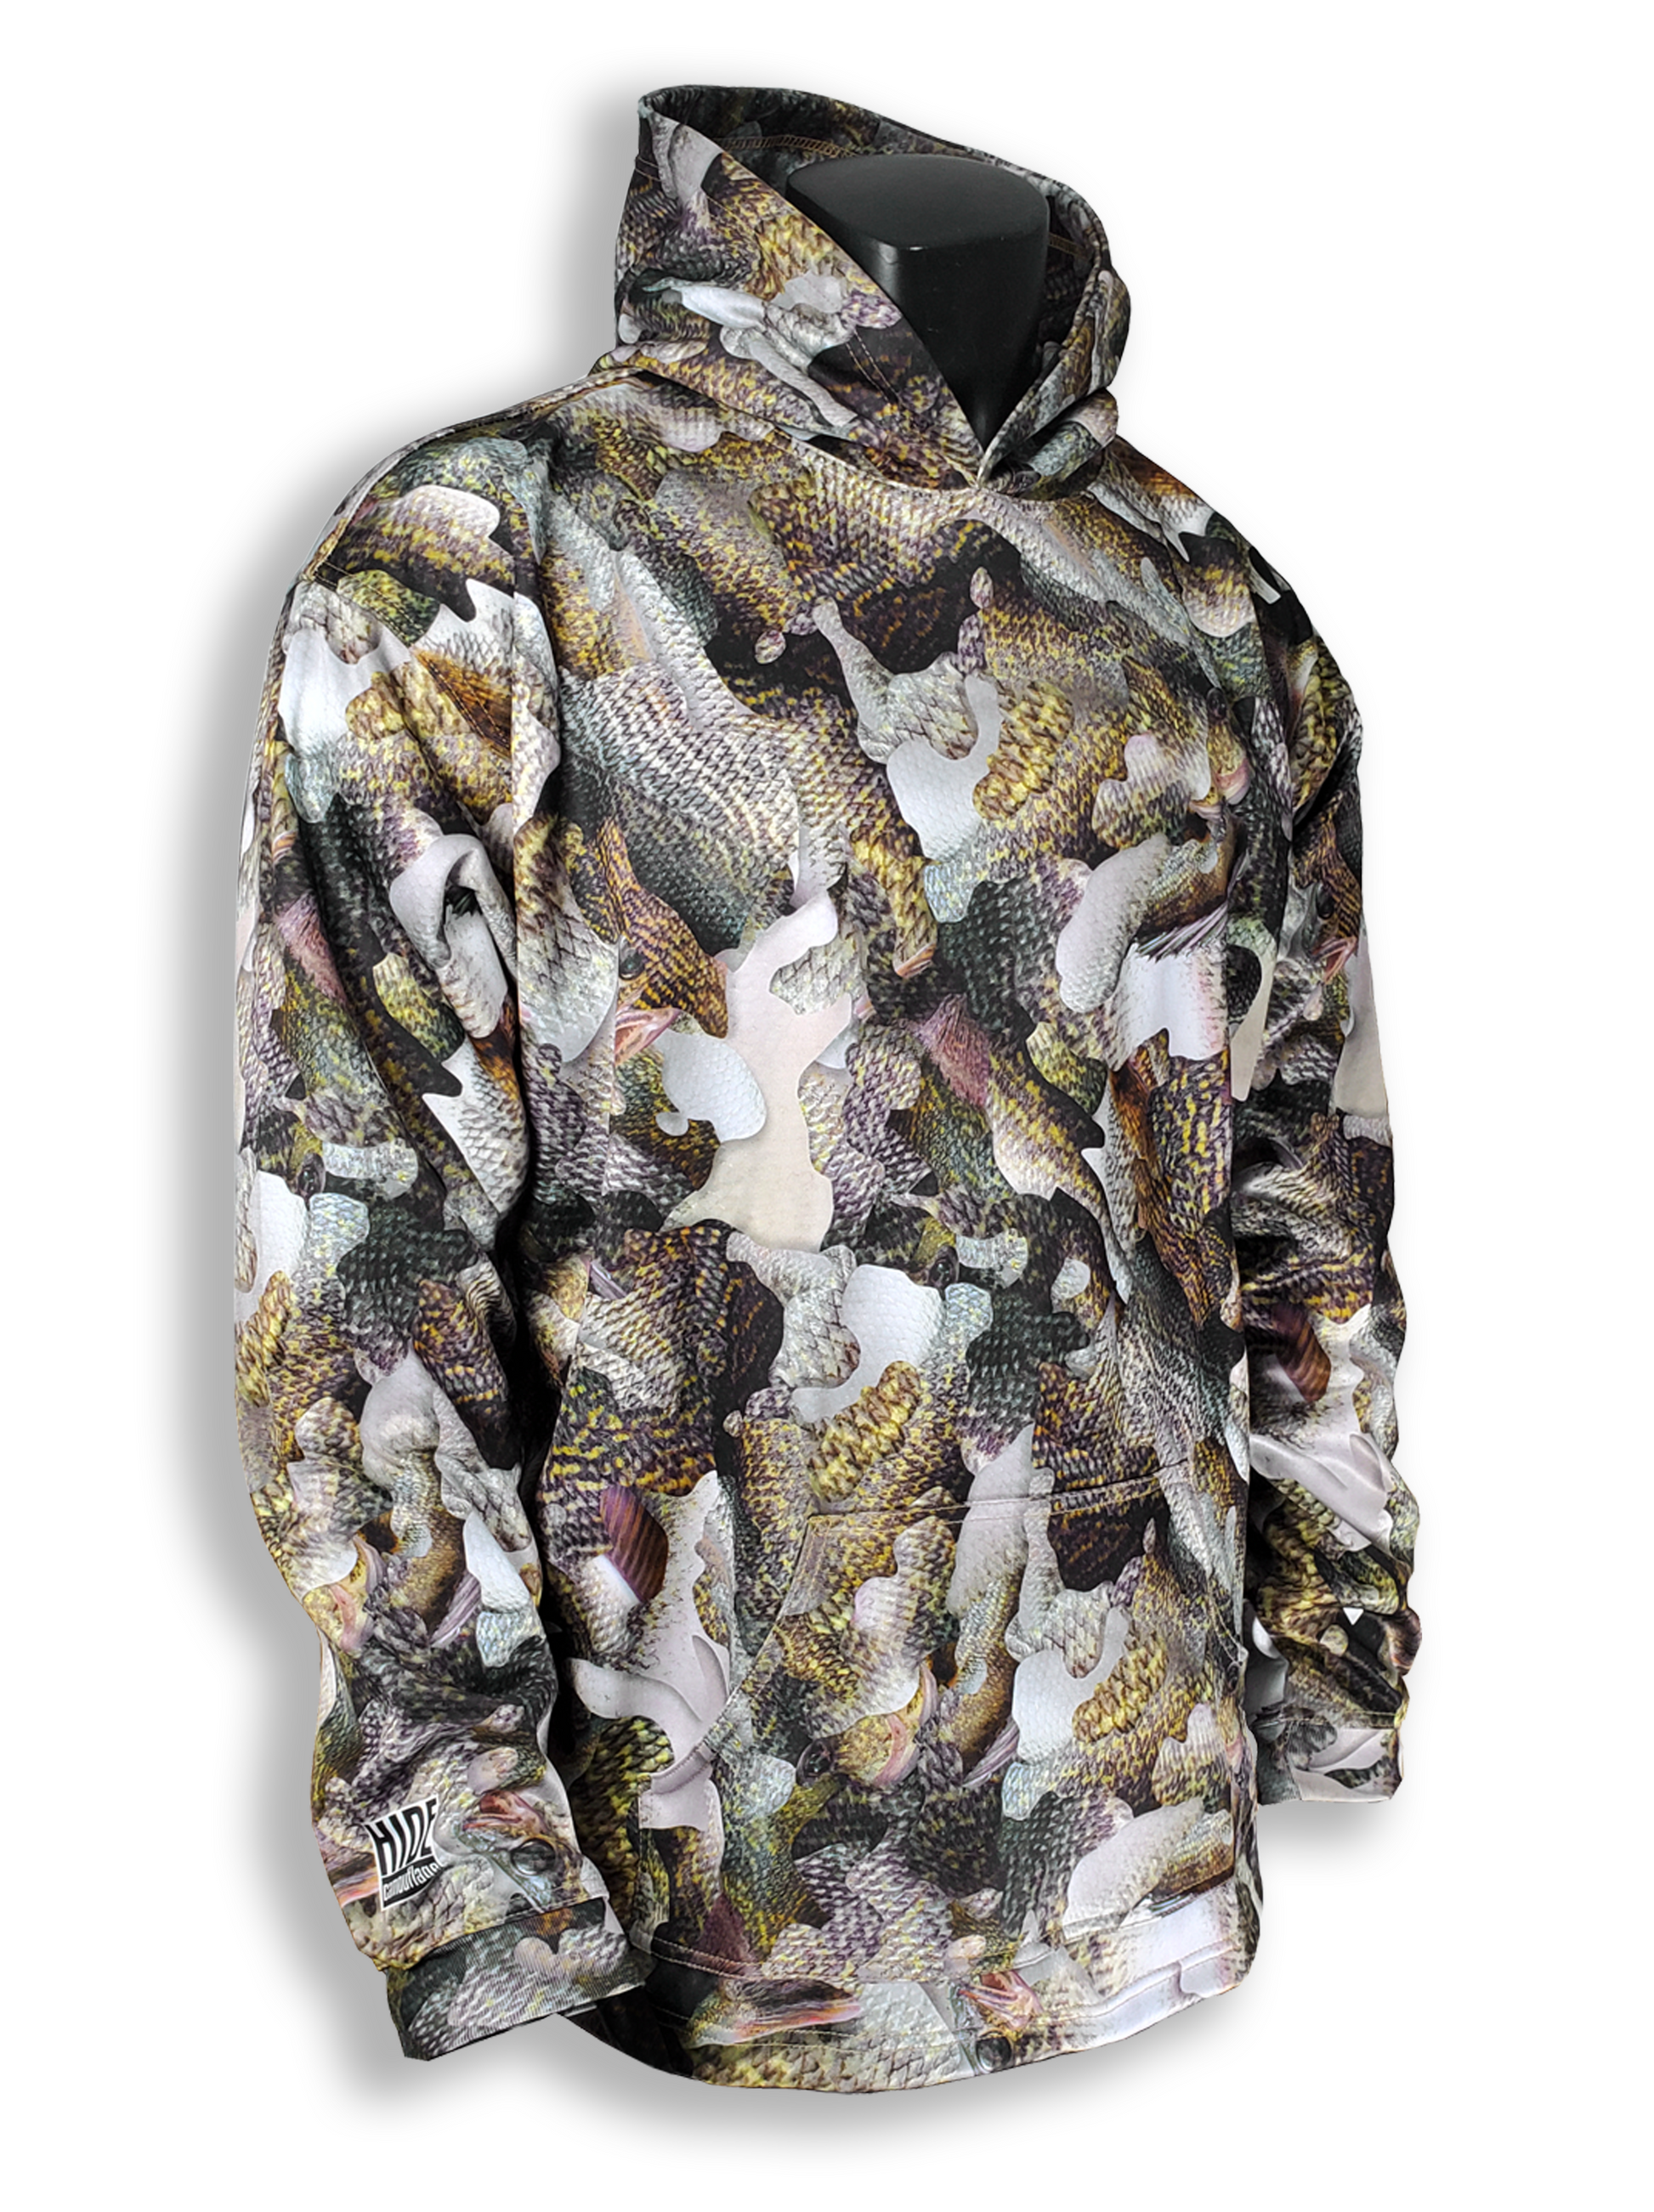 LIFESTYLE Fishing Apparel - Walleye Skin Camo - Hoodie – Hide Camouflage